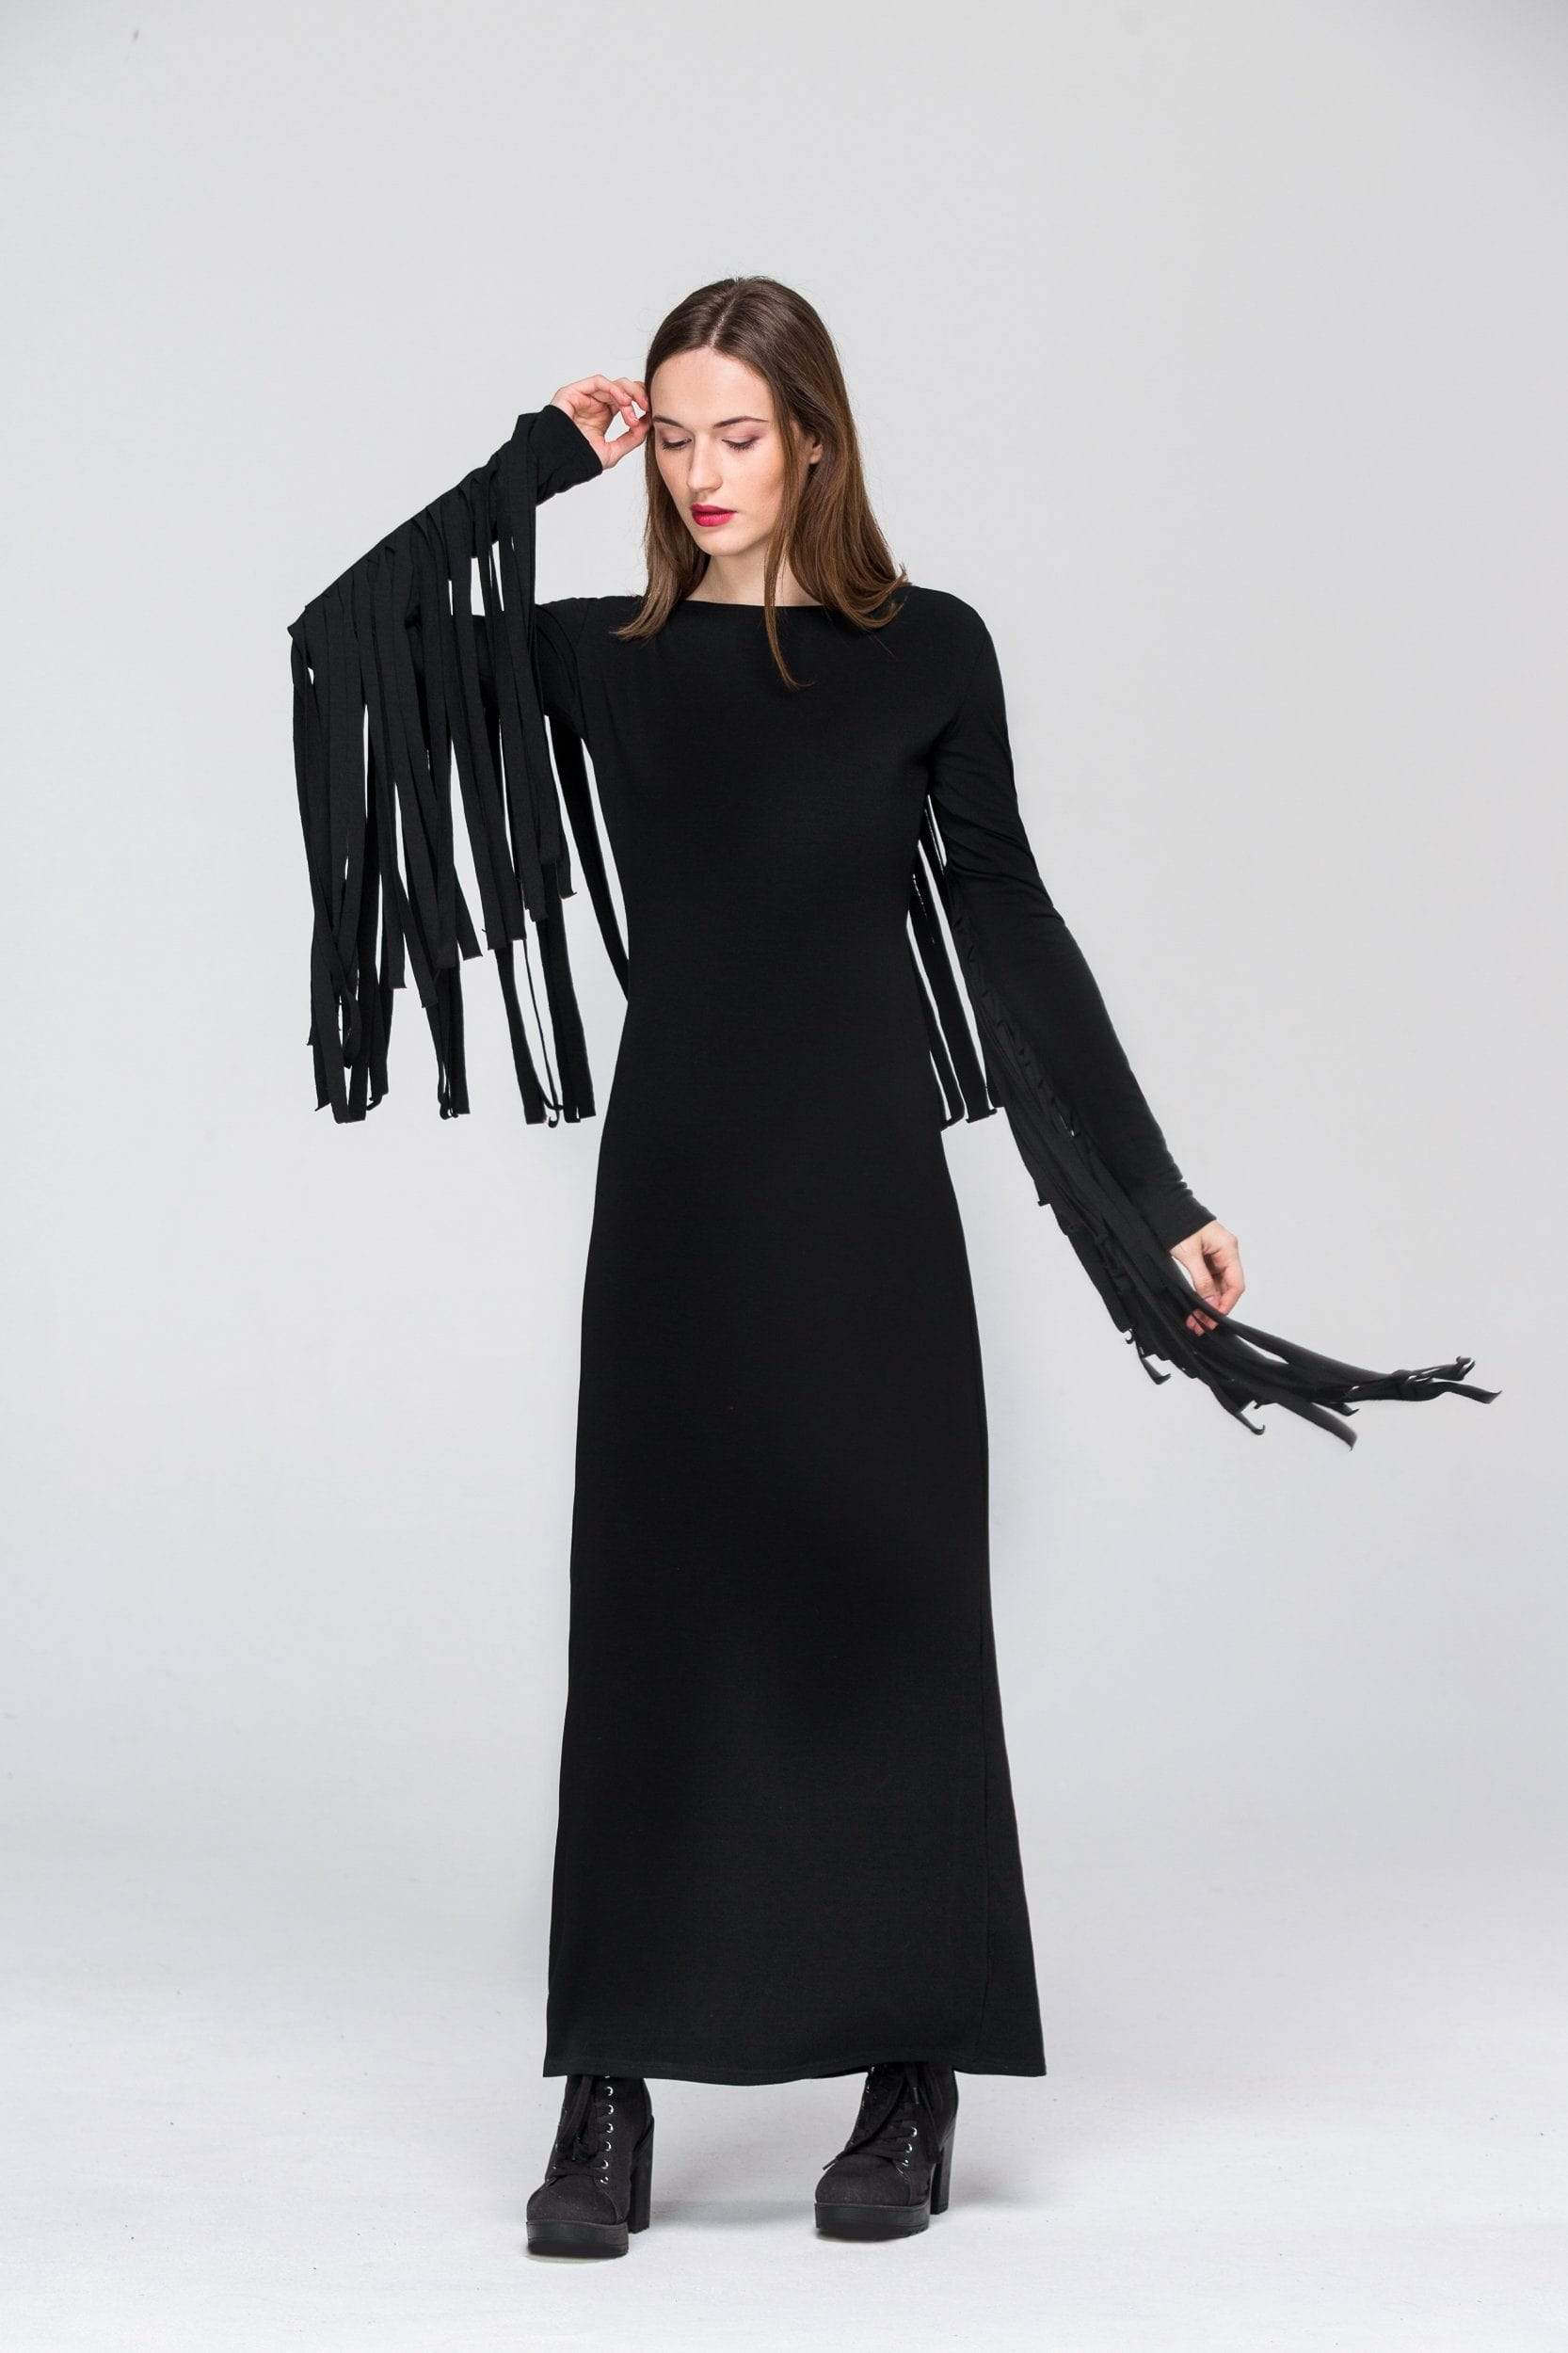 MDNT45 Dresses Black party dress